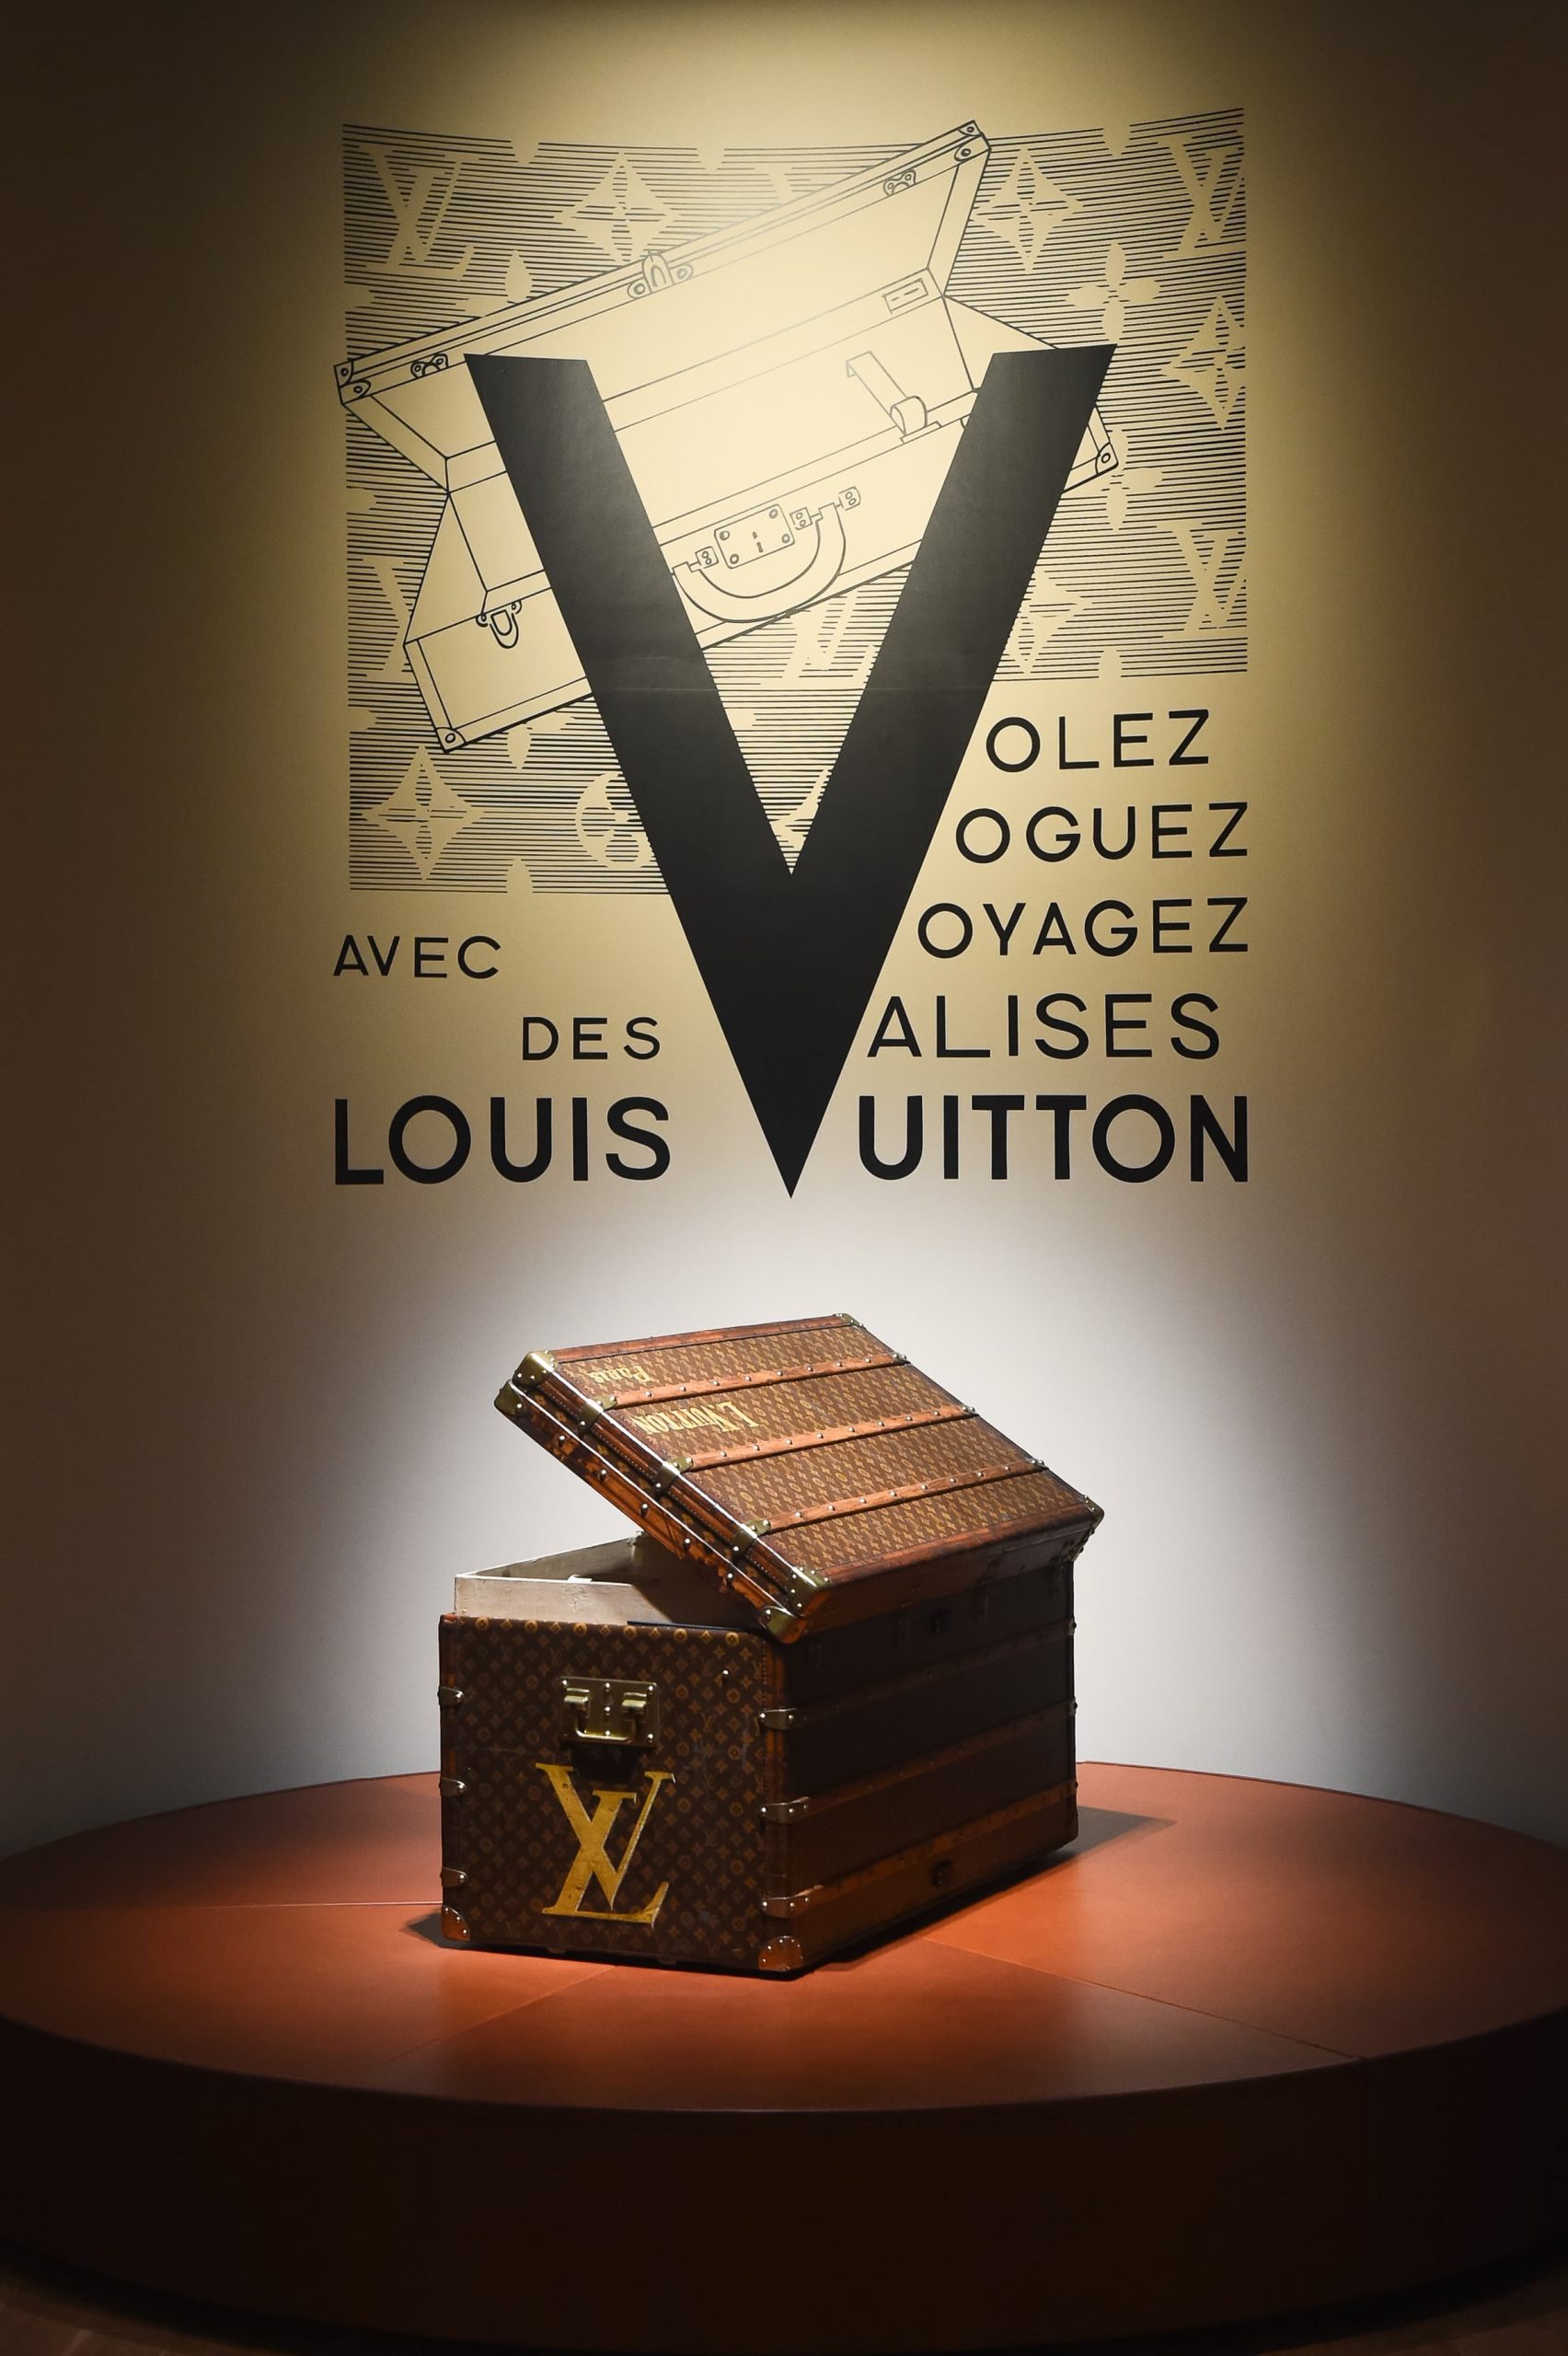 Louis Vuitton Envisions a Positive Path Forward for Cruise 2022